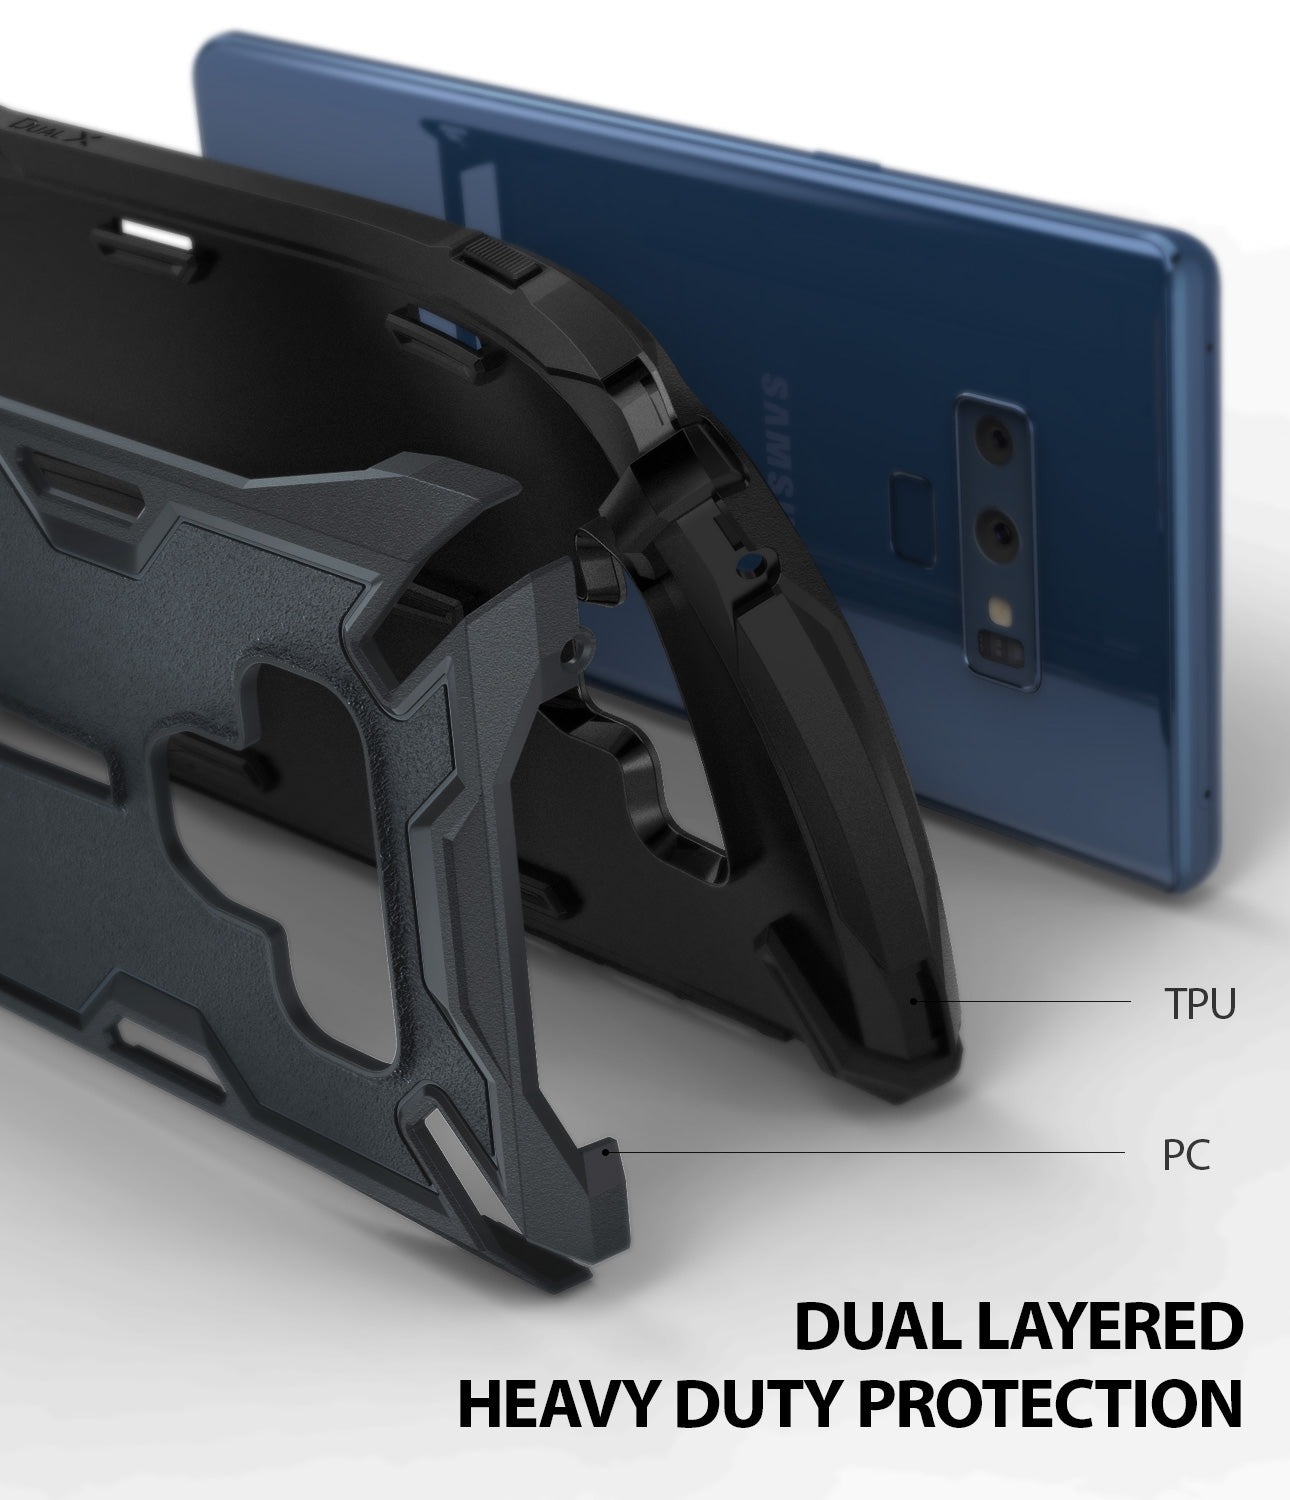 Galaxy Note 9 Case | Dual-X [DX]